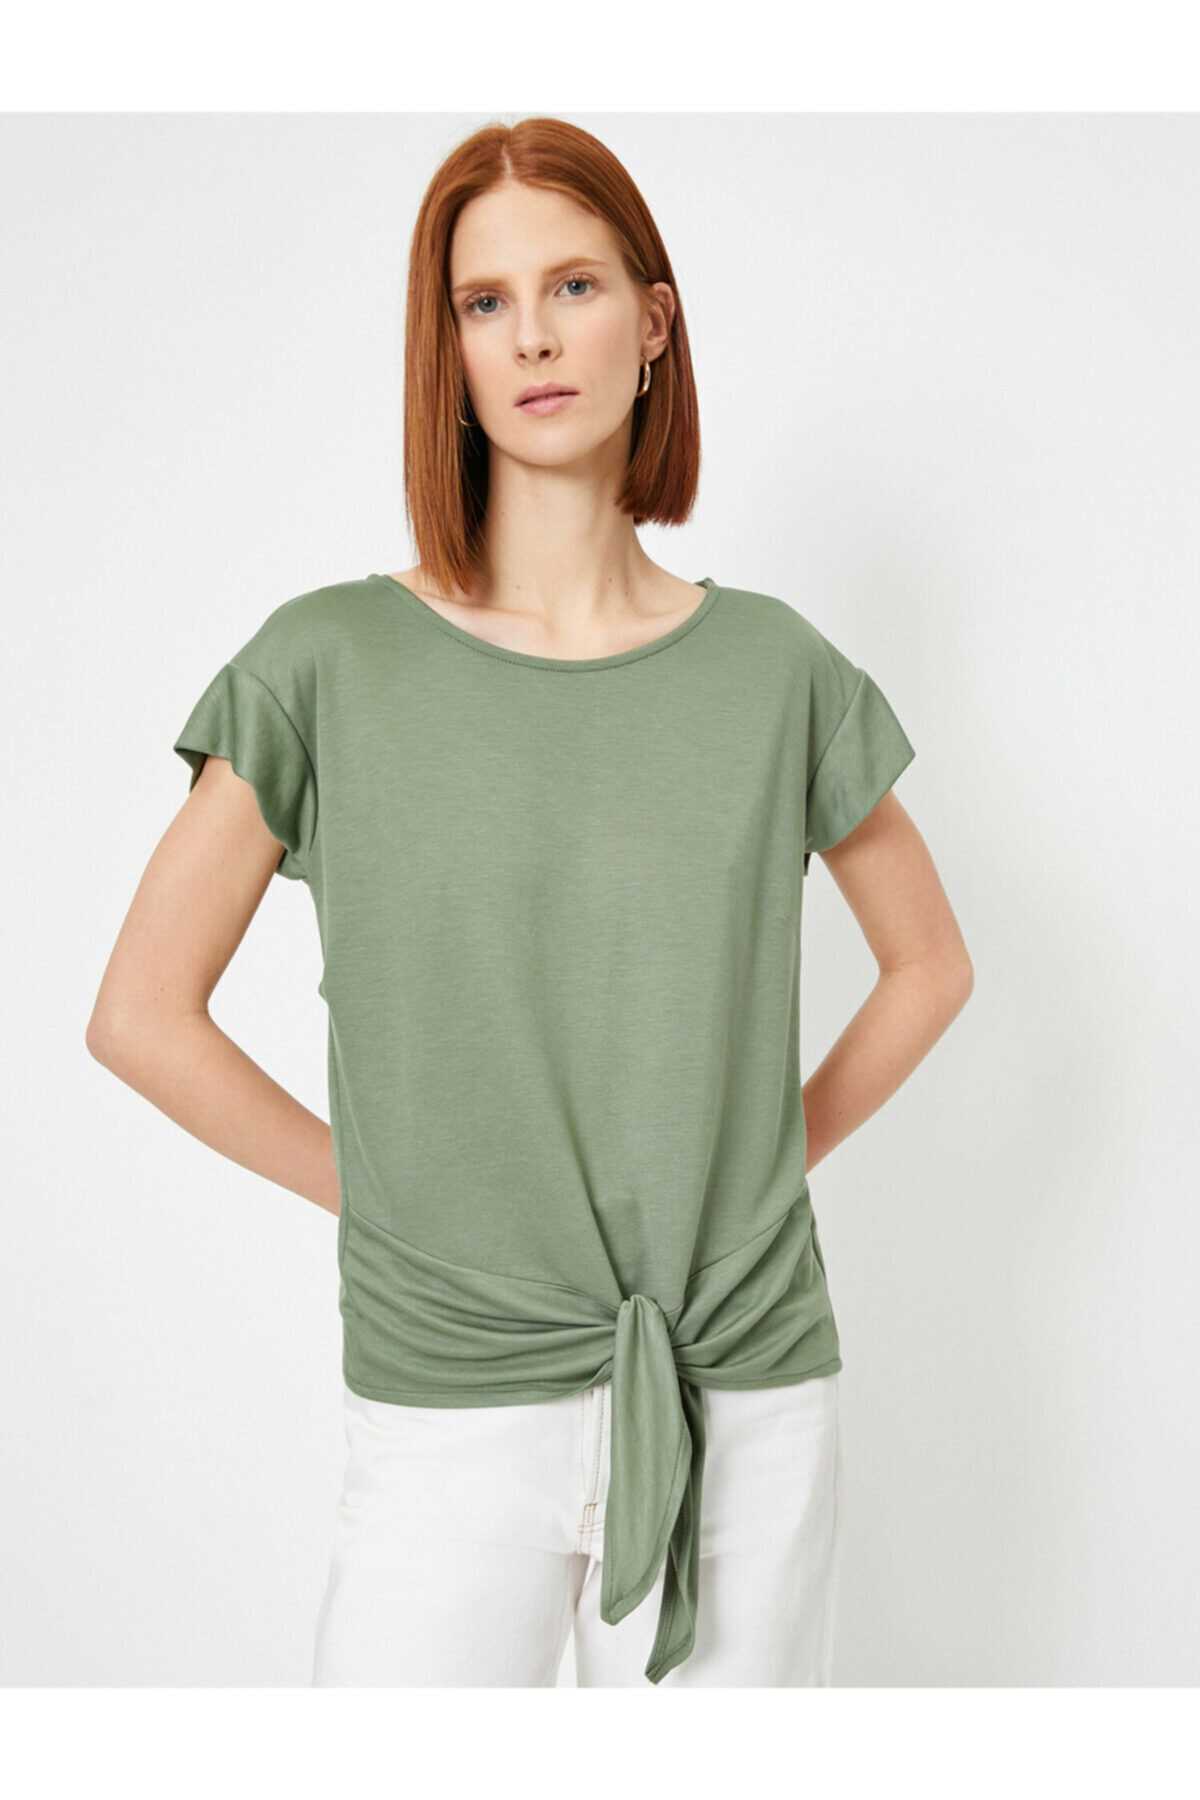 تیشرت زنانه با قیمت برند کوتون رنگ سبز کد ty36356829